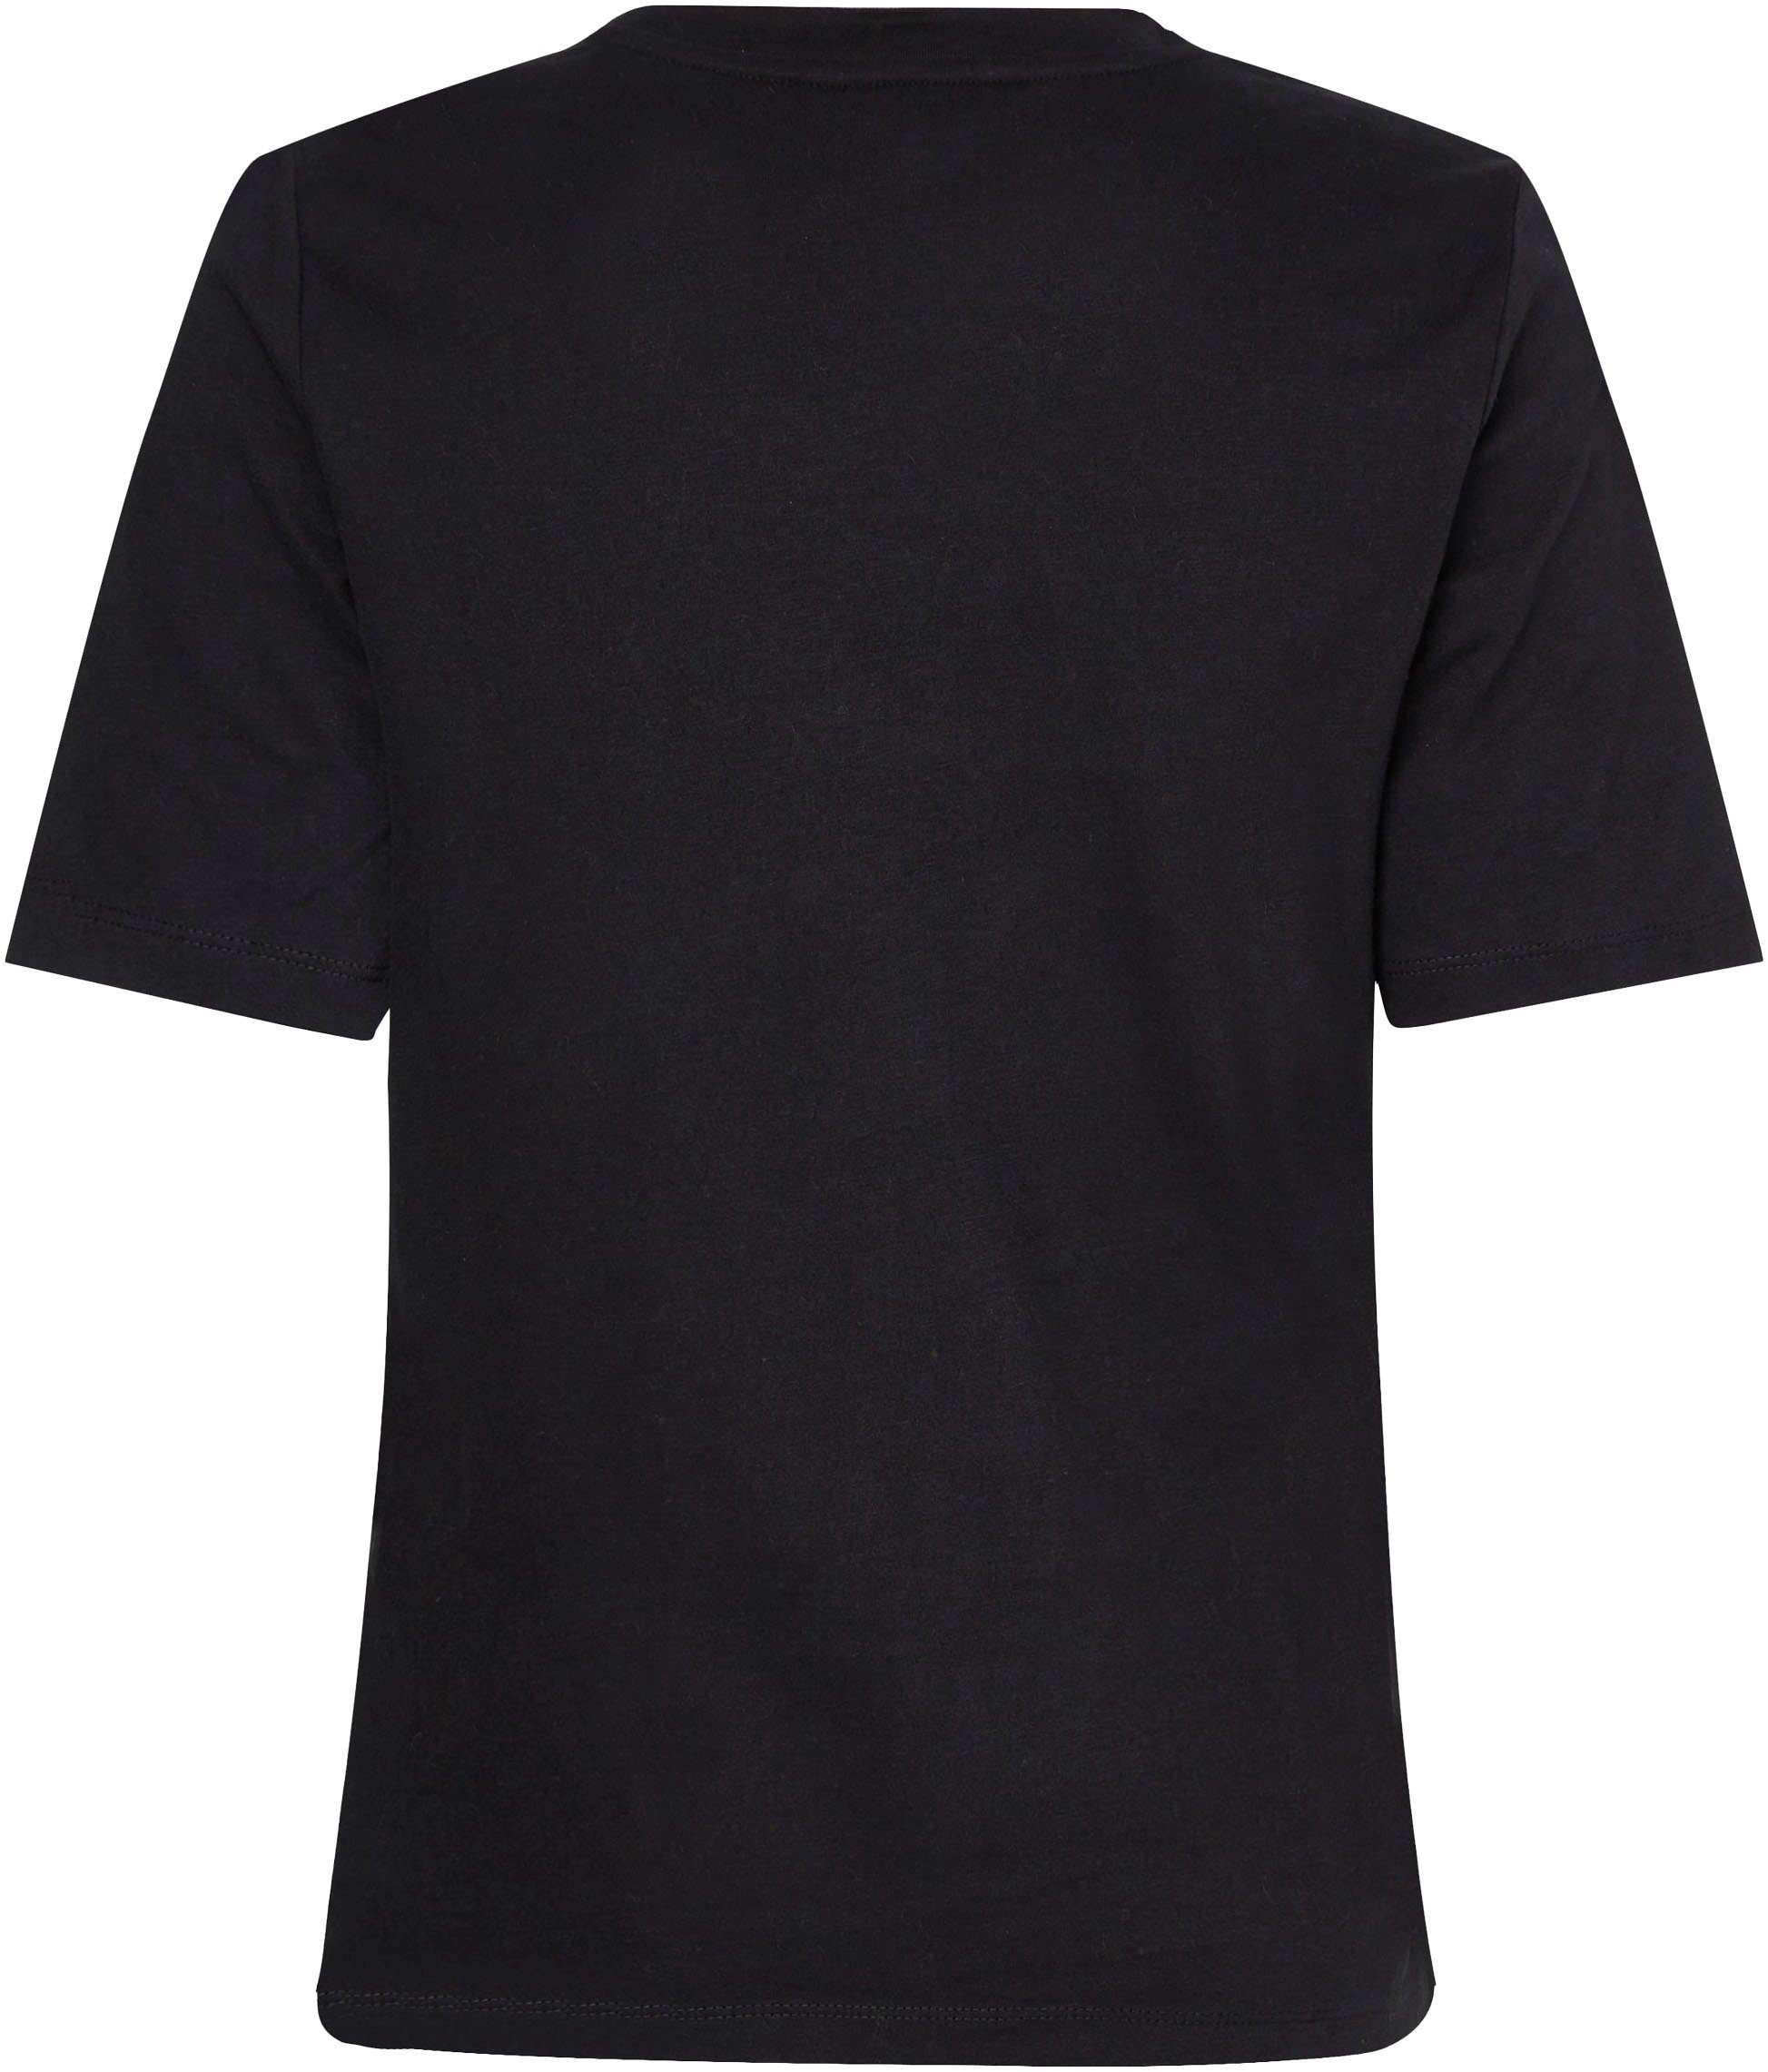 Tommy Hilfiger T-Shirt REG BRUSHED Black Tommy SS CTN NY mit C-NK Hilfiger Markenlabel